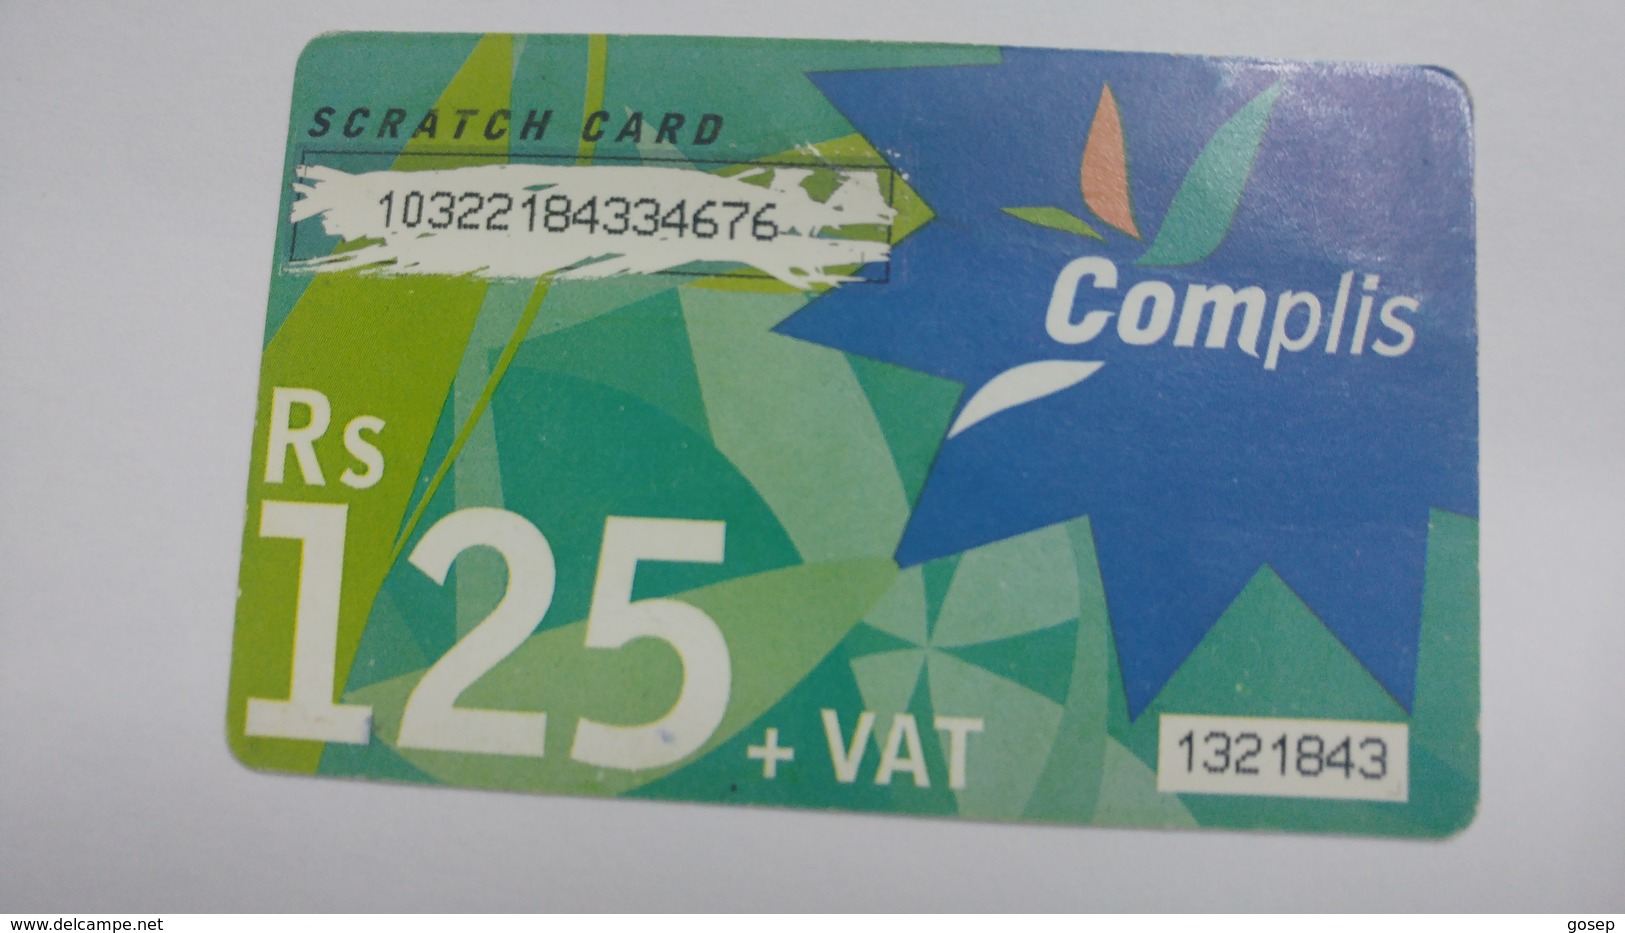 Mauritius-scratch Card-complis-(rs125+vat)-used Card+1card Prepiad Free - Mauritius